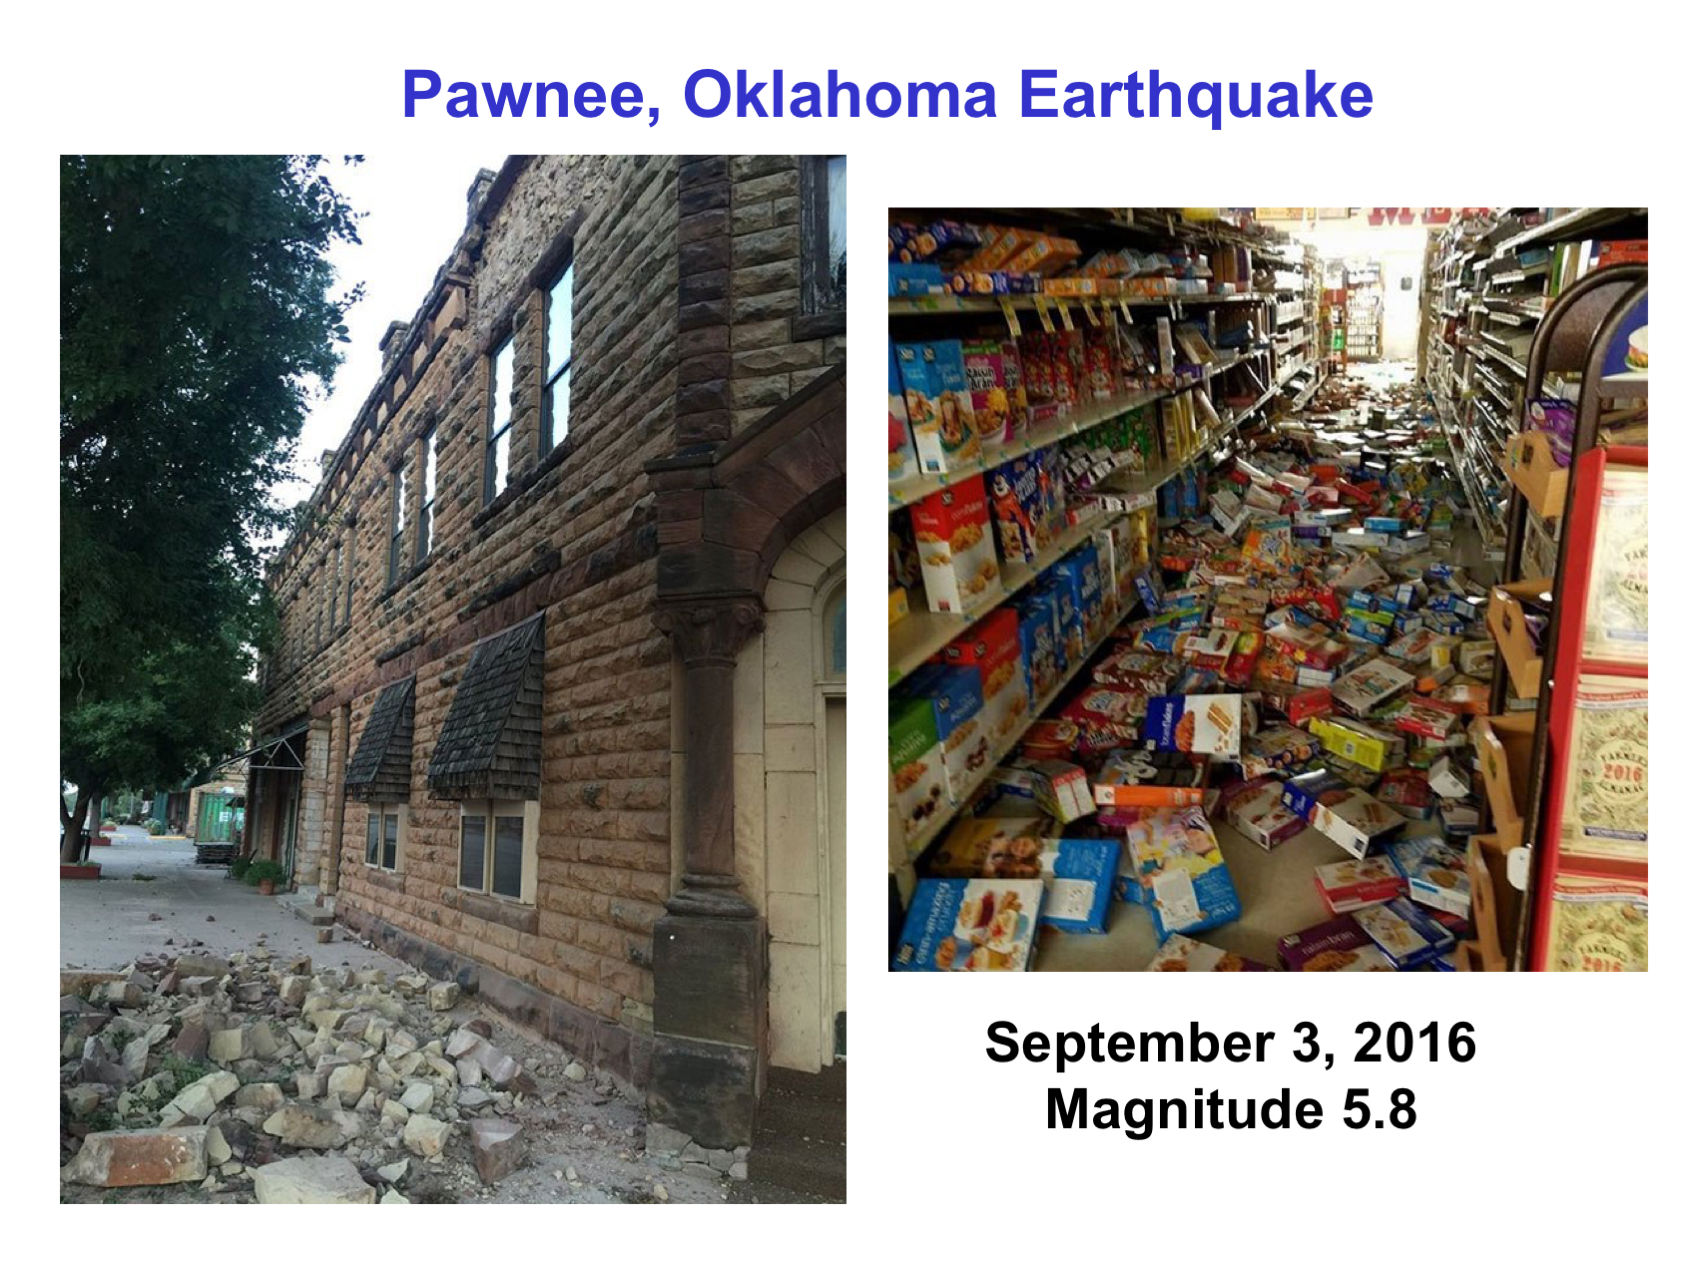 Pawnee, OK quake damage